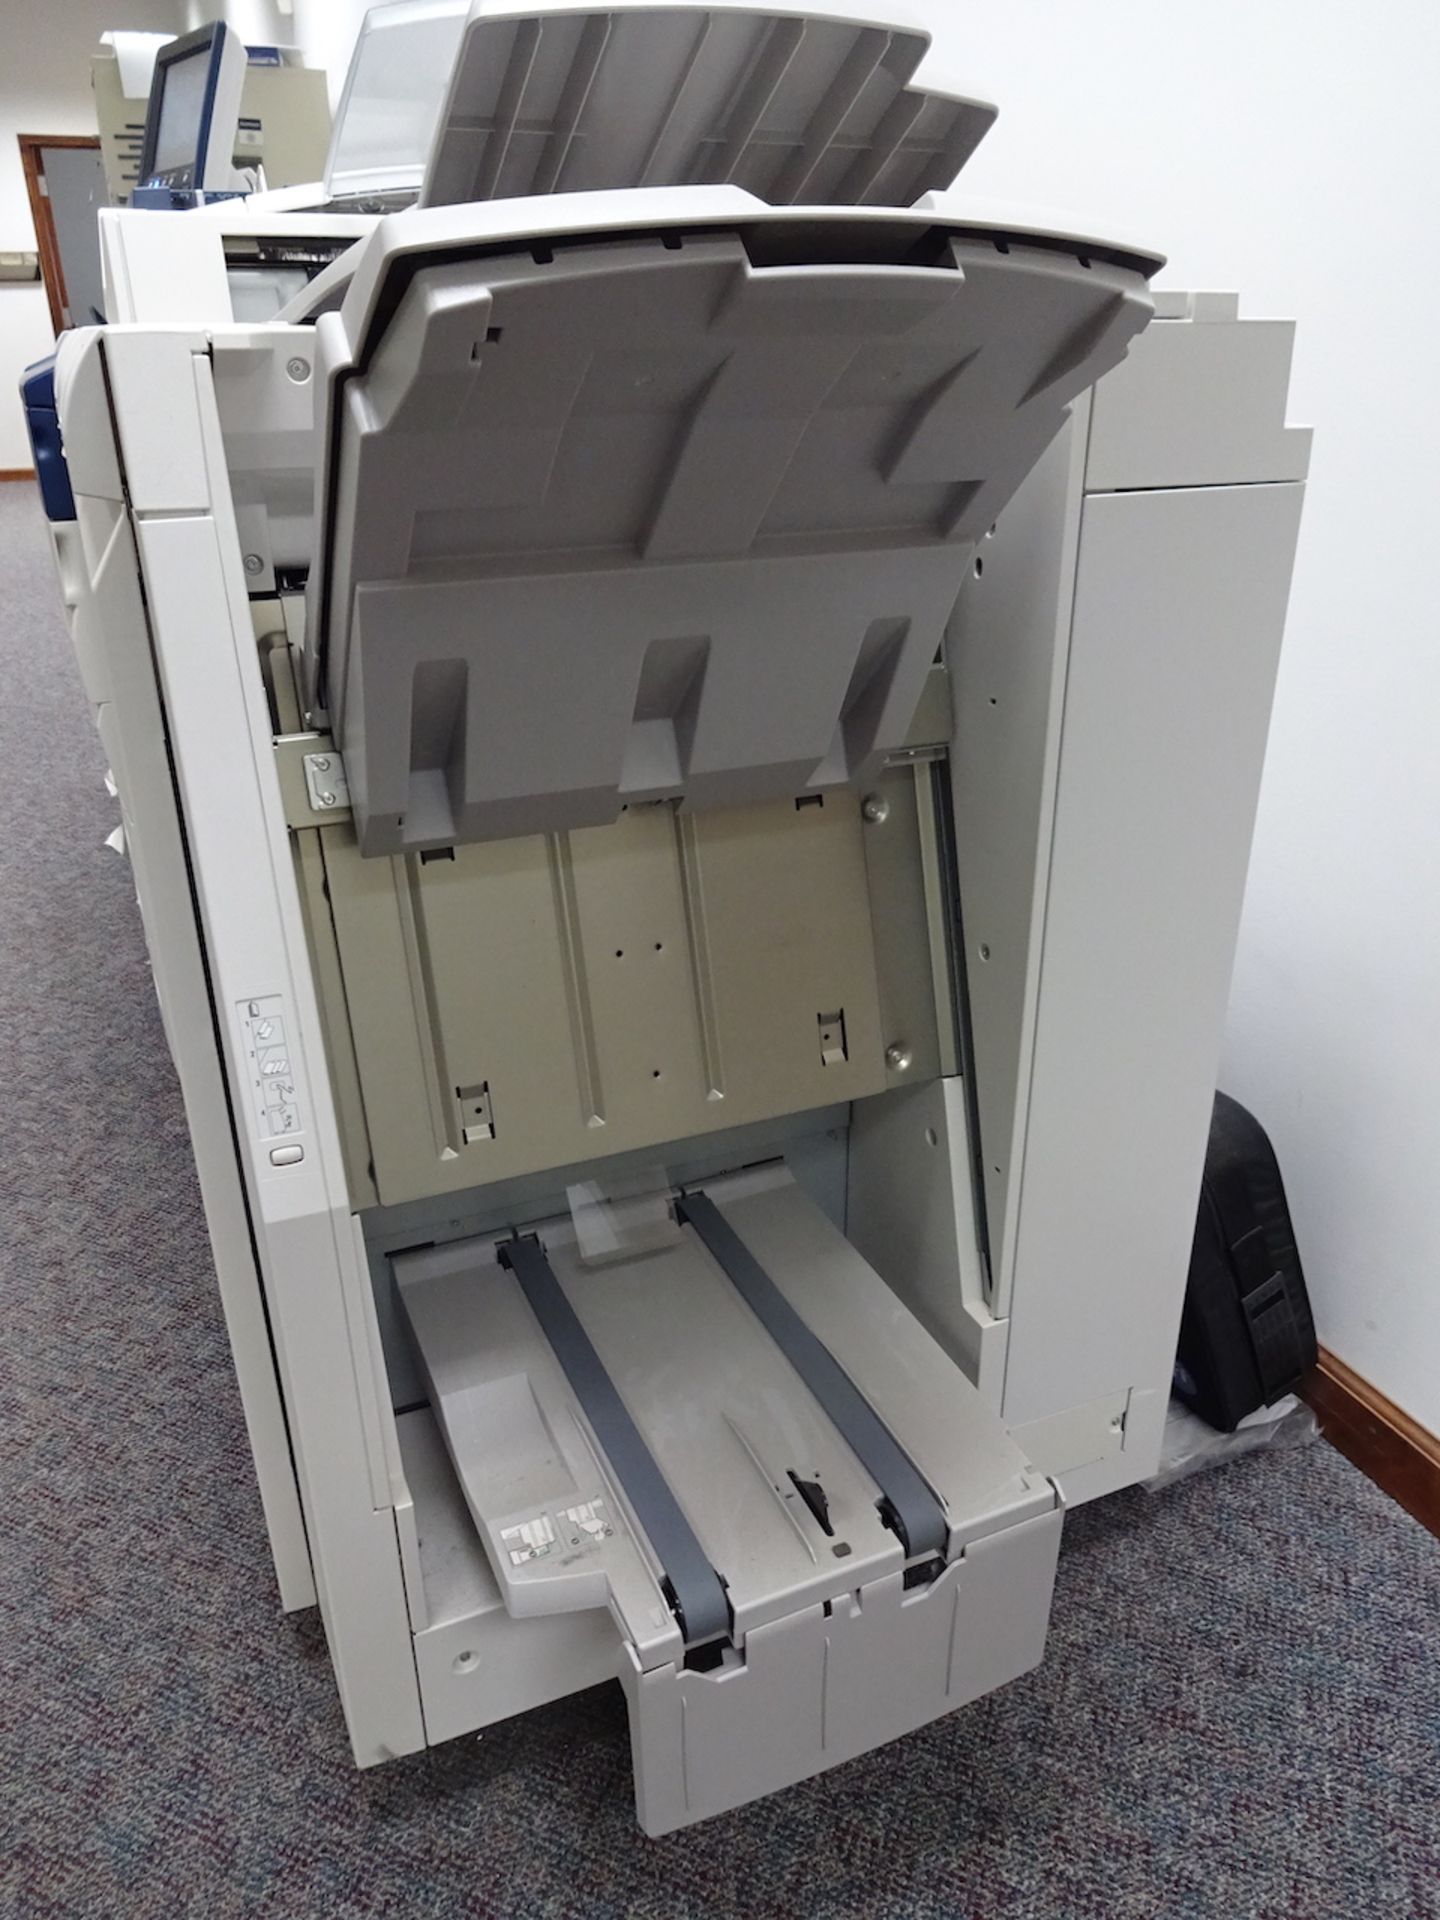 2017 Xerox Model C70 (EC702) Multi-Function Printer: S/N E2B659667, 412,286 Impressions - Image 7 of 11